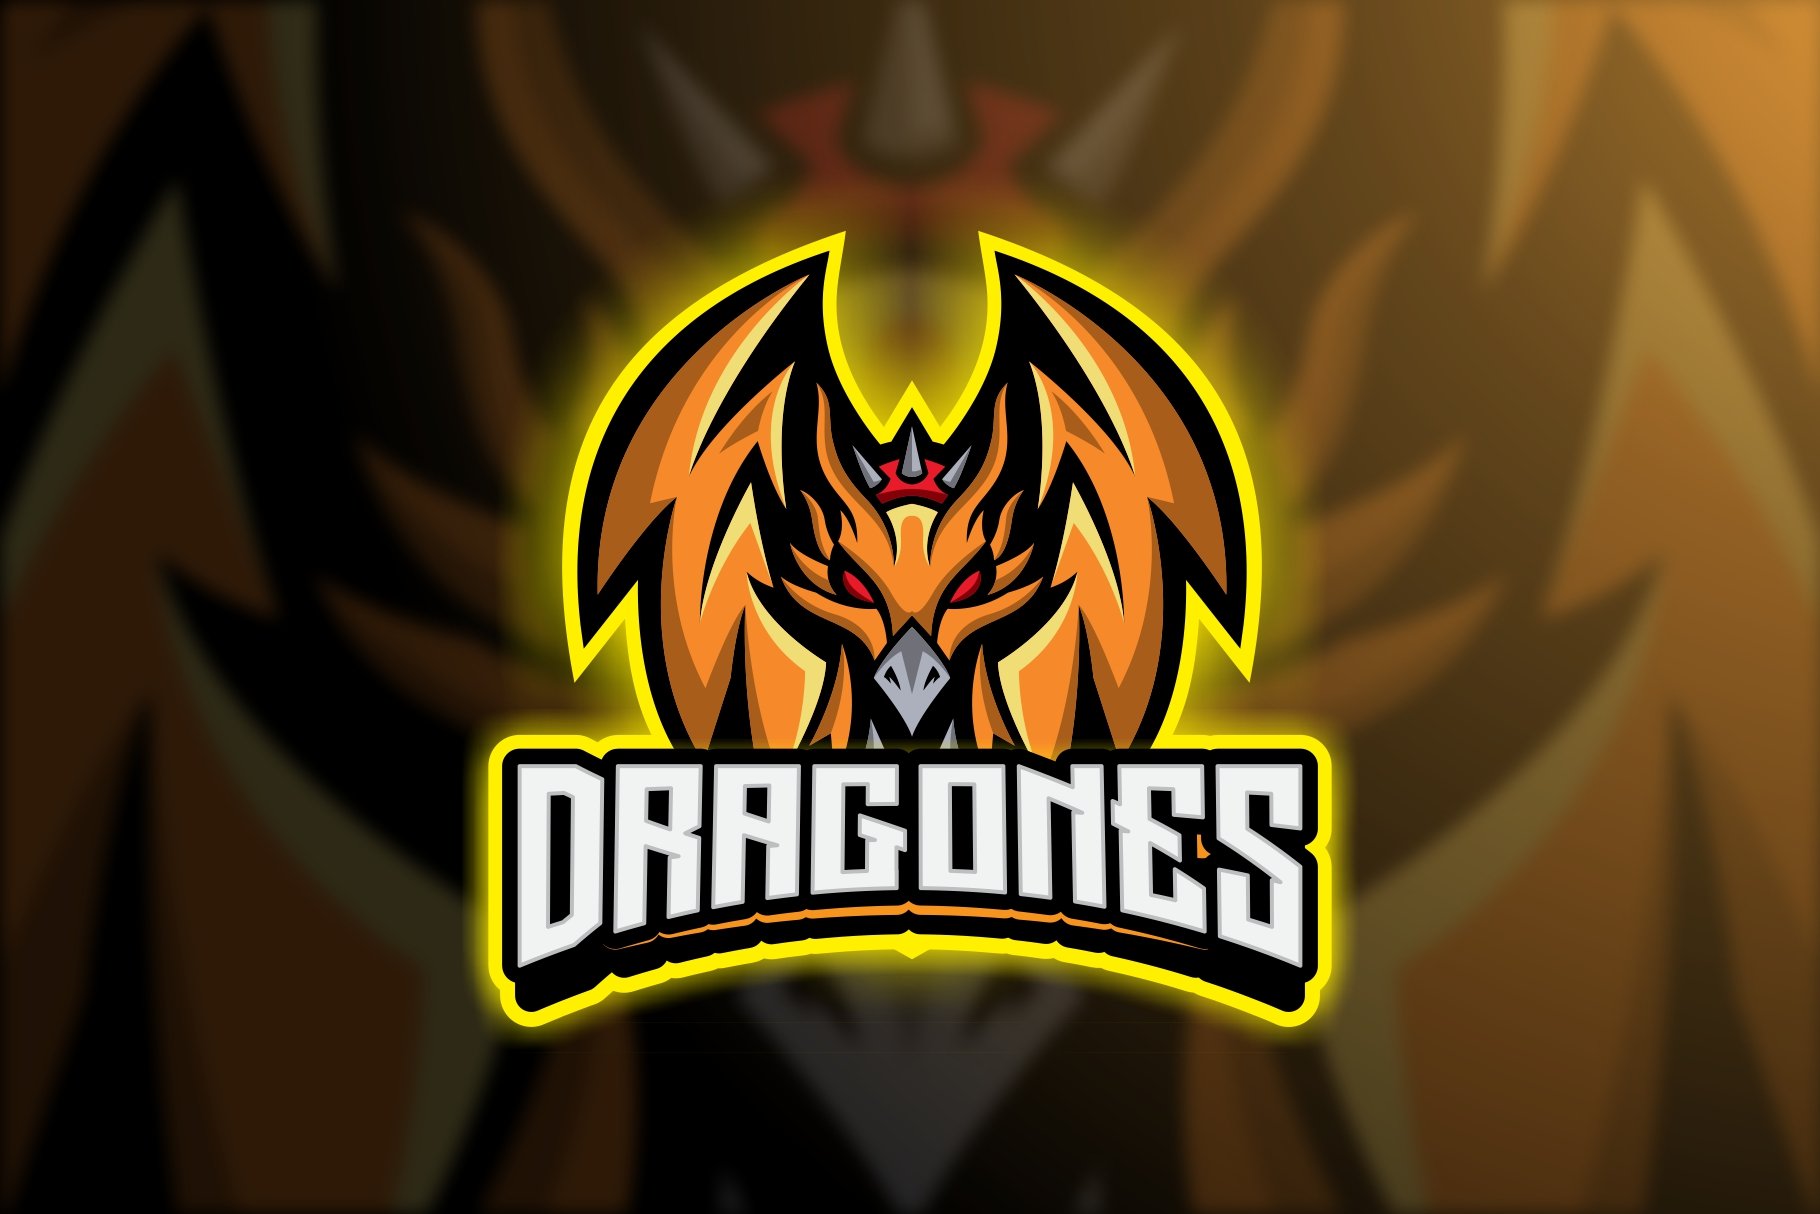 Dragon - mascot esport Logo Template cover image.